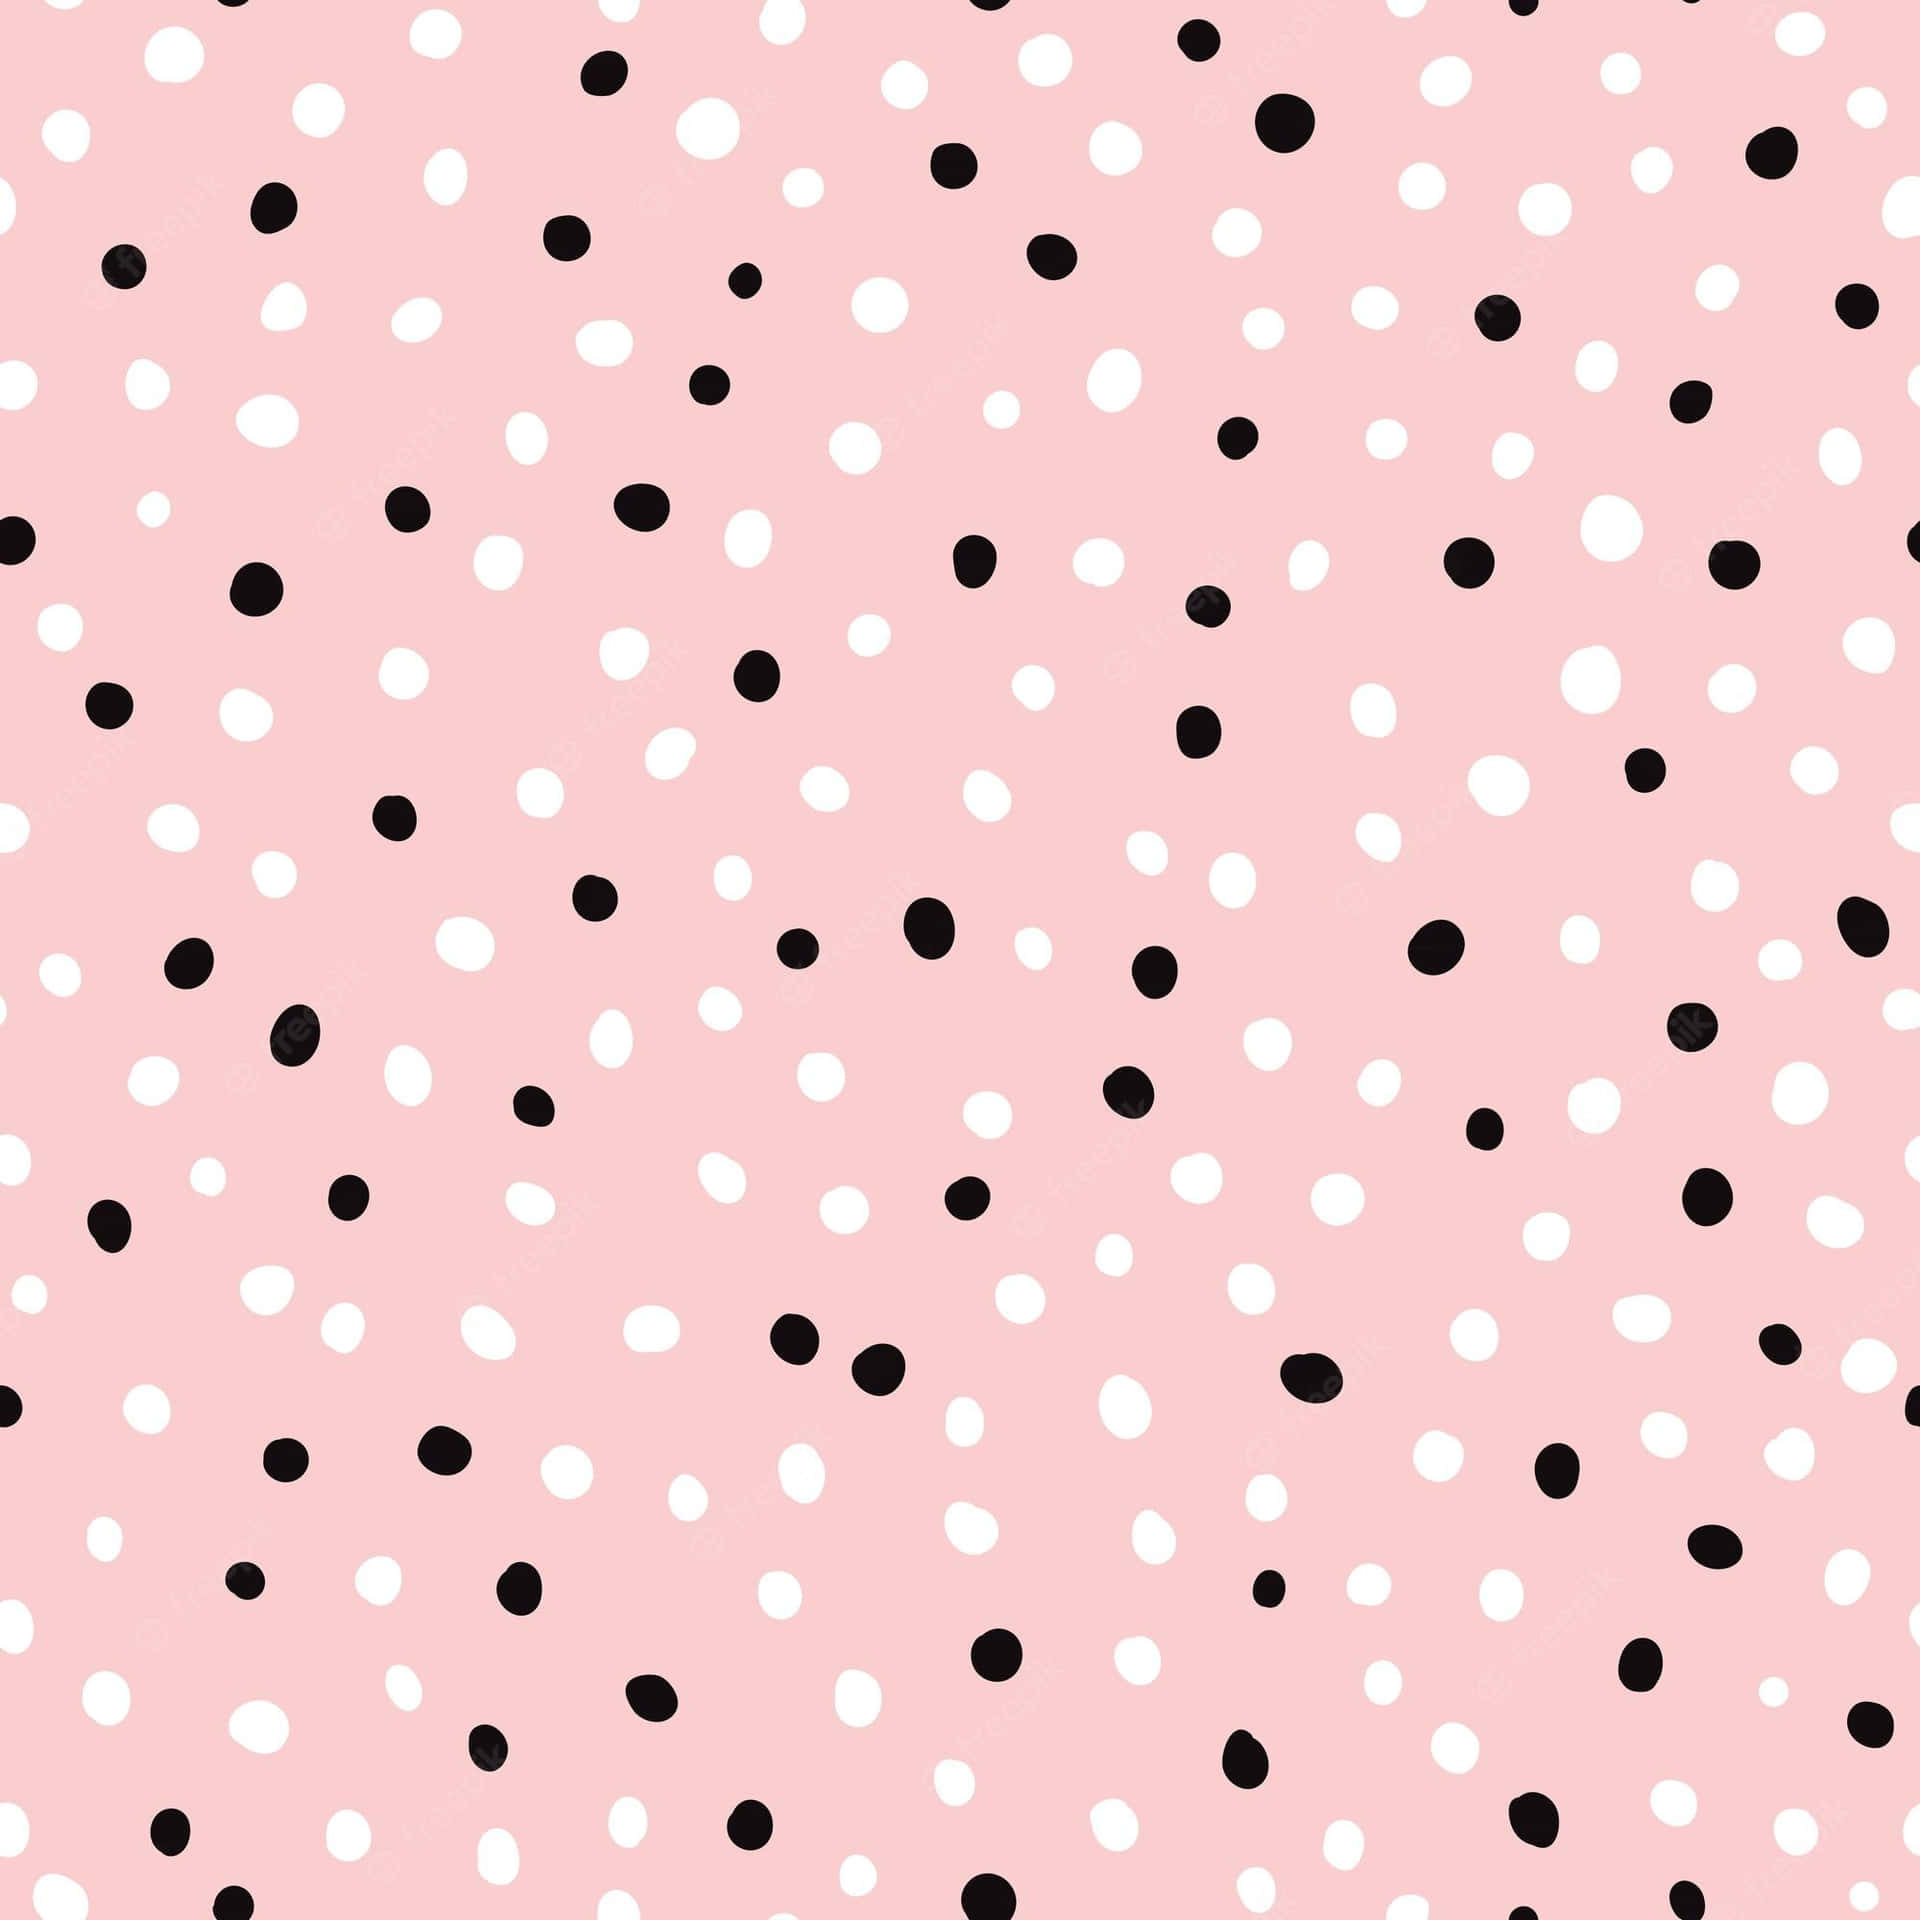 A Pink And Black Polka Dot Pattern Wallpaper